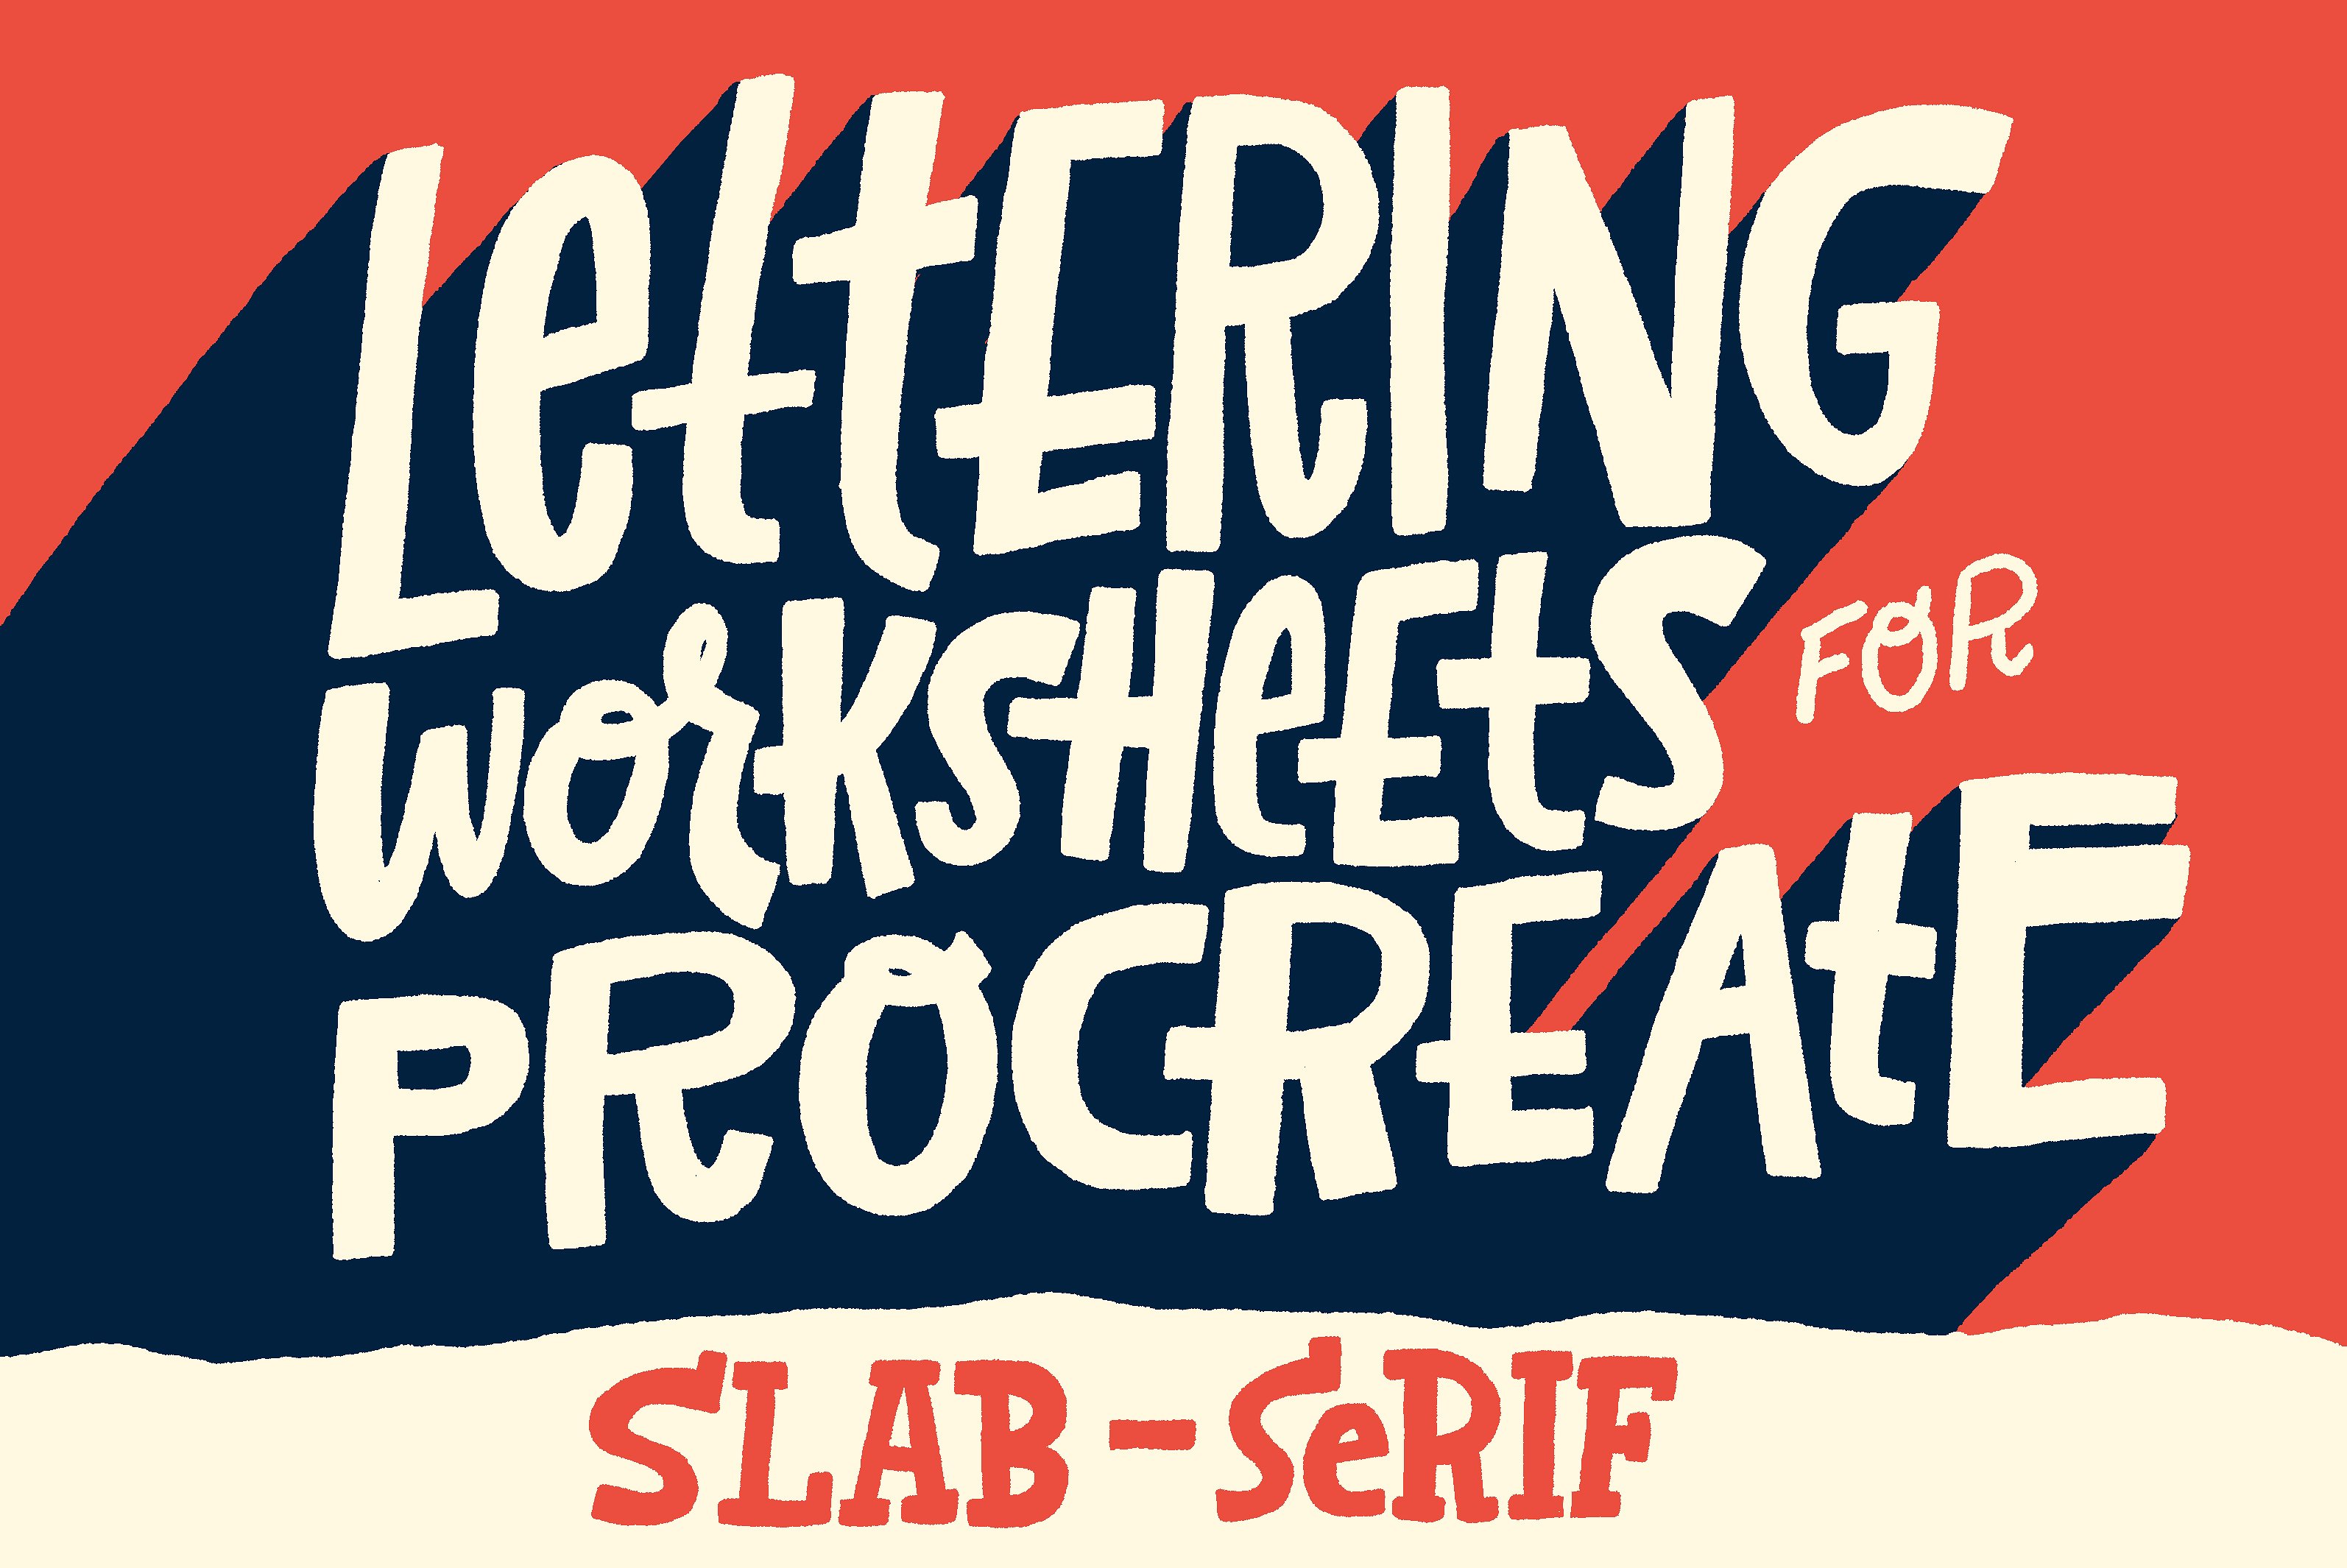 粗衬线字体Procreate&PS笔刷 Slab-Serif Lettering Worksheet插图